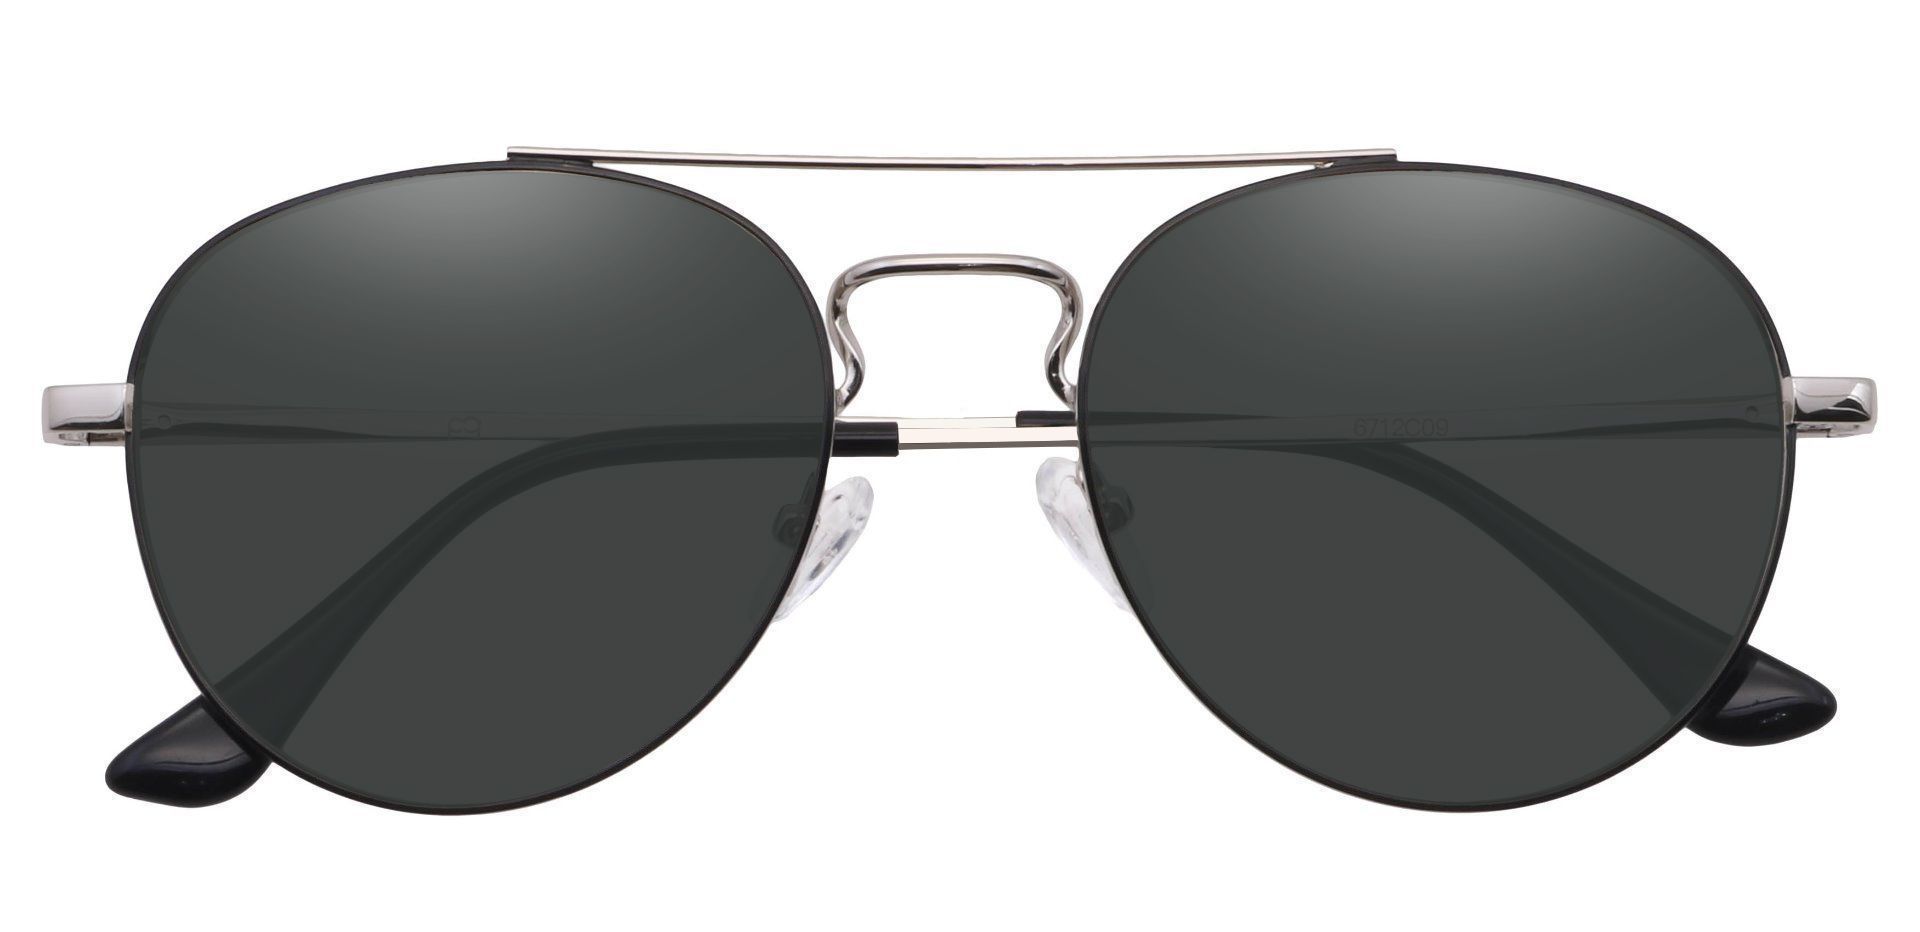 Trapp Aviator Prescription Sunglasses - Gray Frame With Gray Lenses